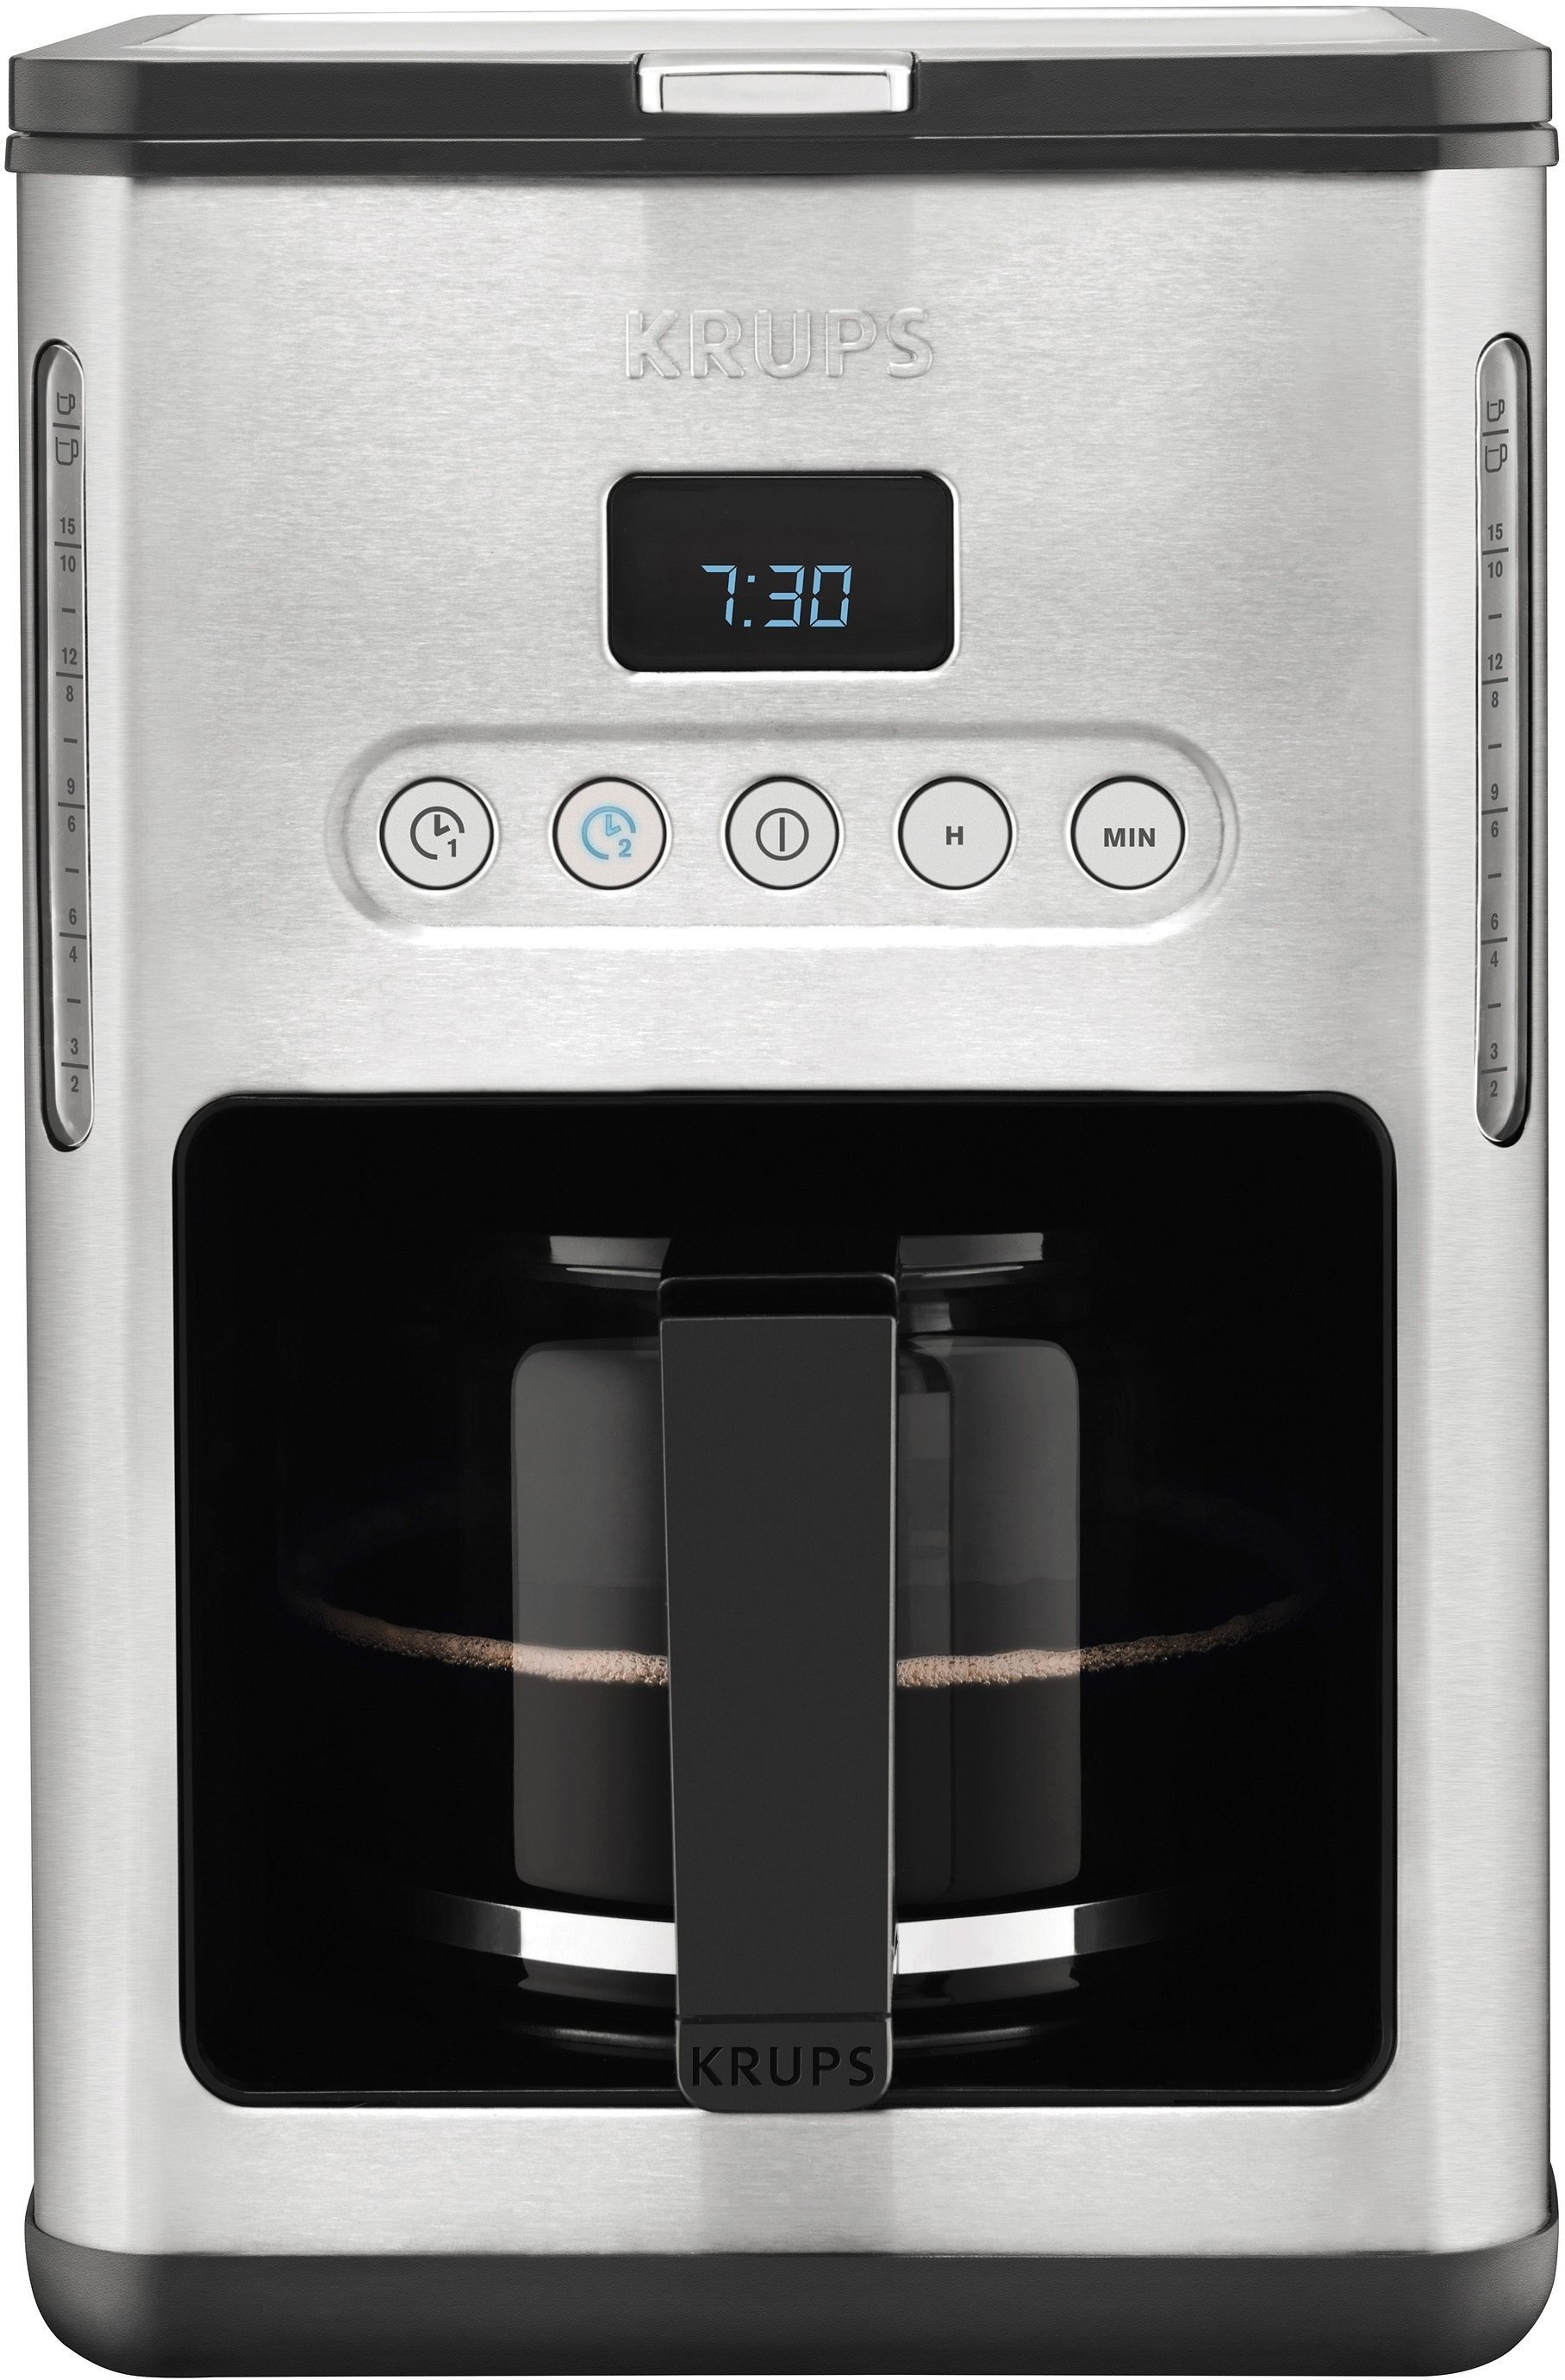 hochwertige KM442D, Keep Krups Warm-Funktion, 1,25l Kaffeekanne, Filter-Kaffeemaschine 1x4, Filterkaffeemaschine Programmierbare, Papierfilter mit